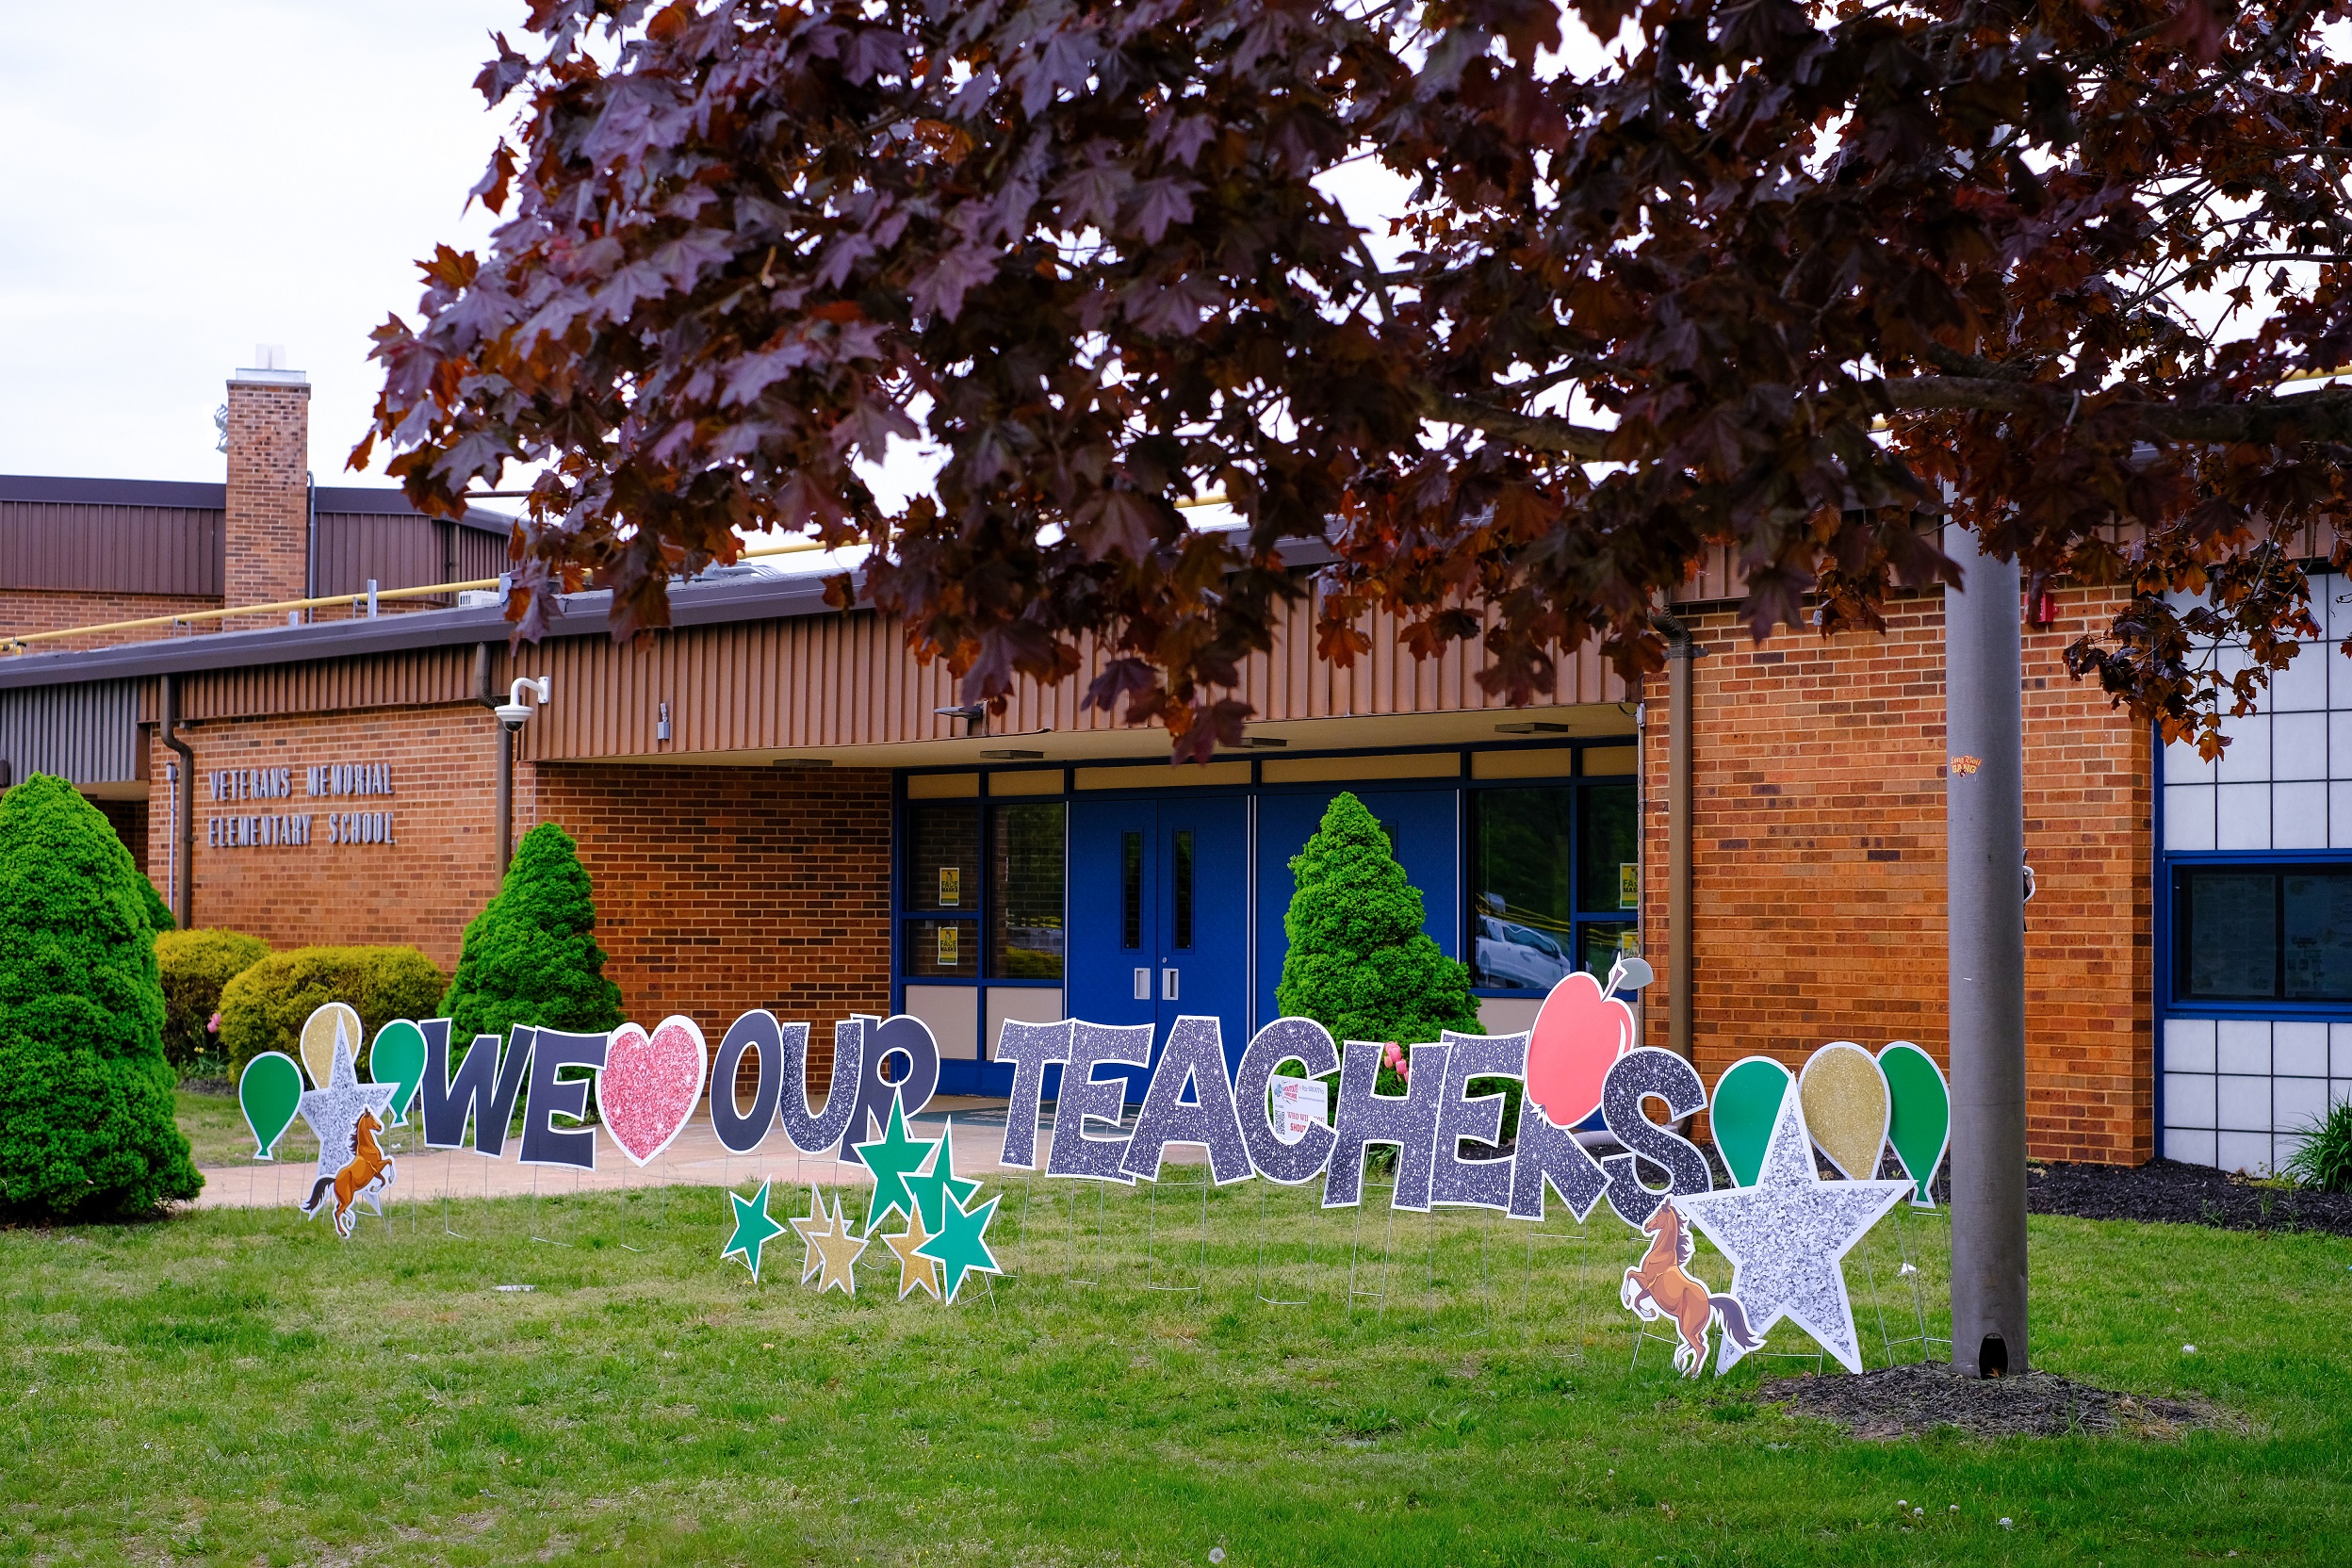 Veterans Memorial Elementary School – Just another Brick Township Board ...